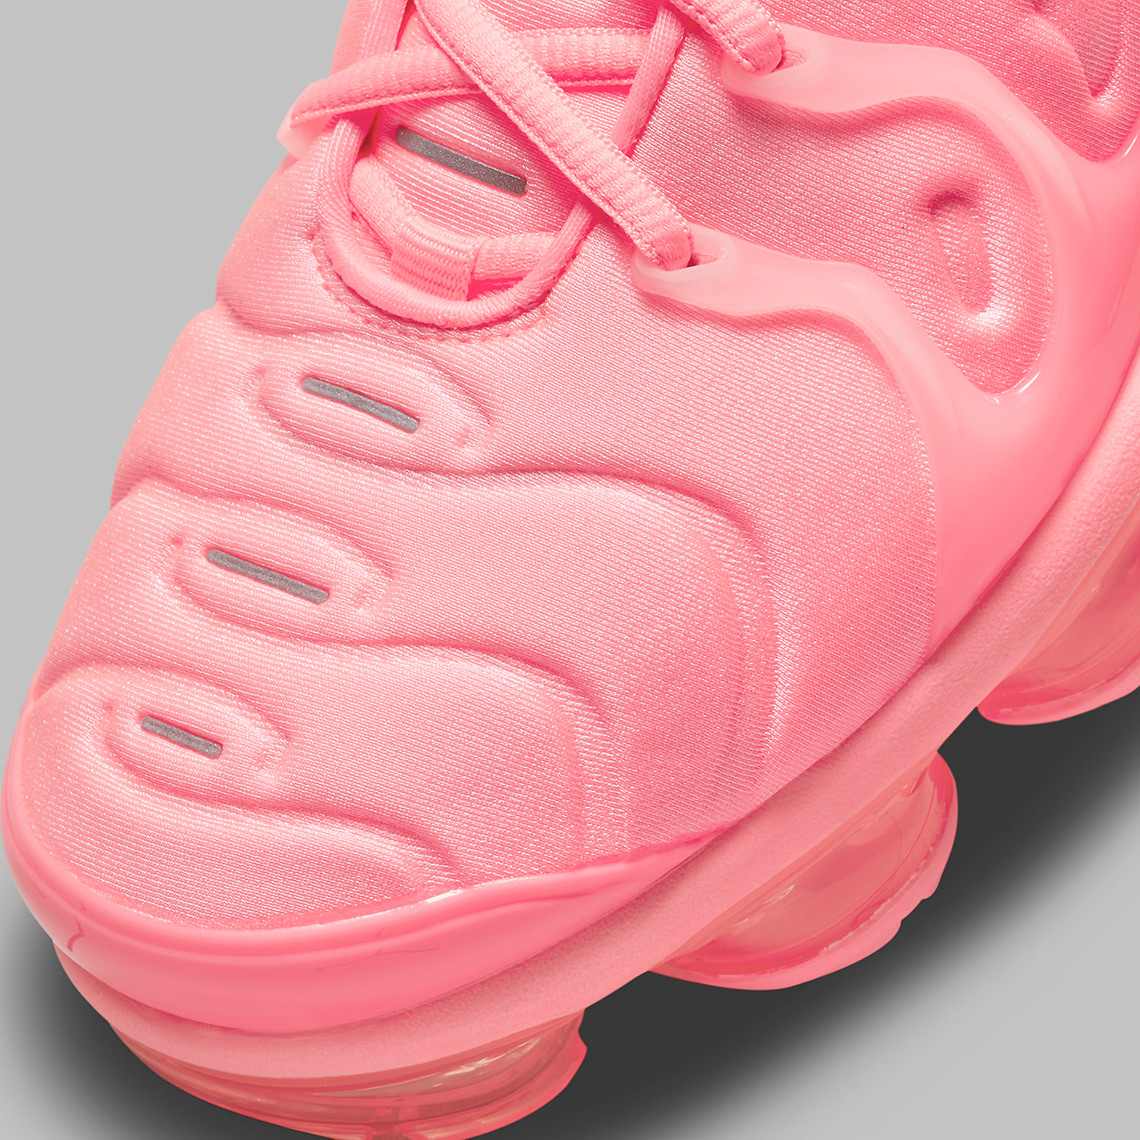 pink bubblegum vapormax